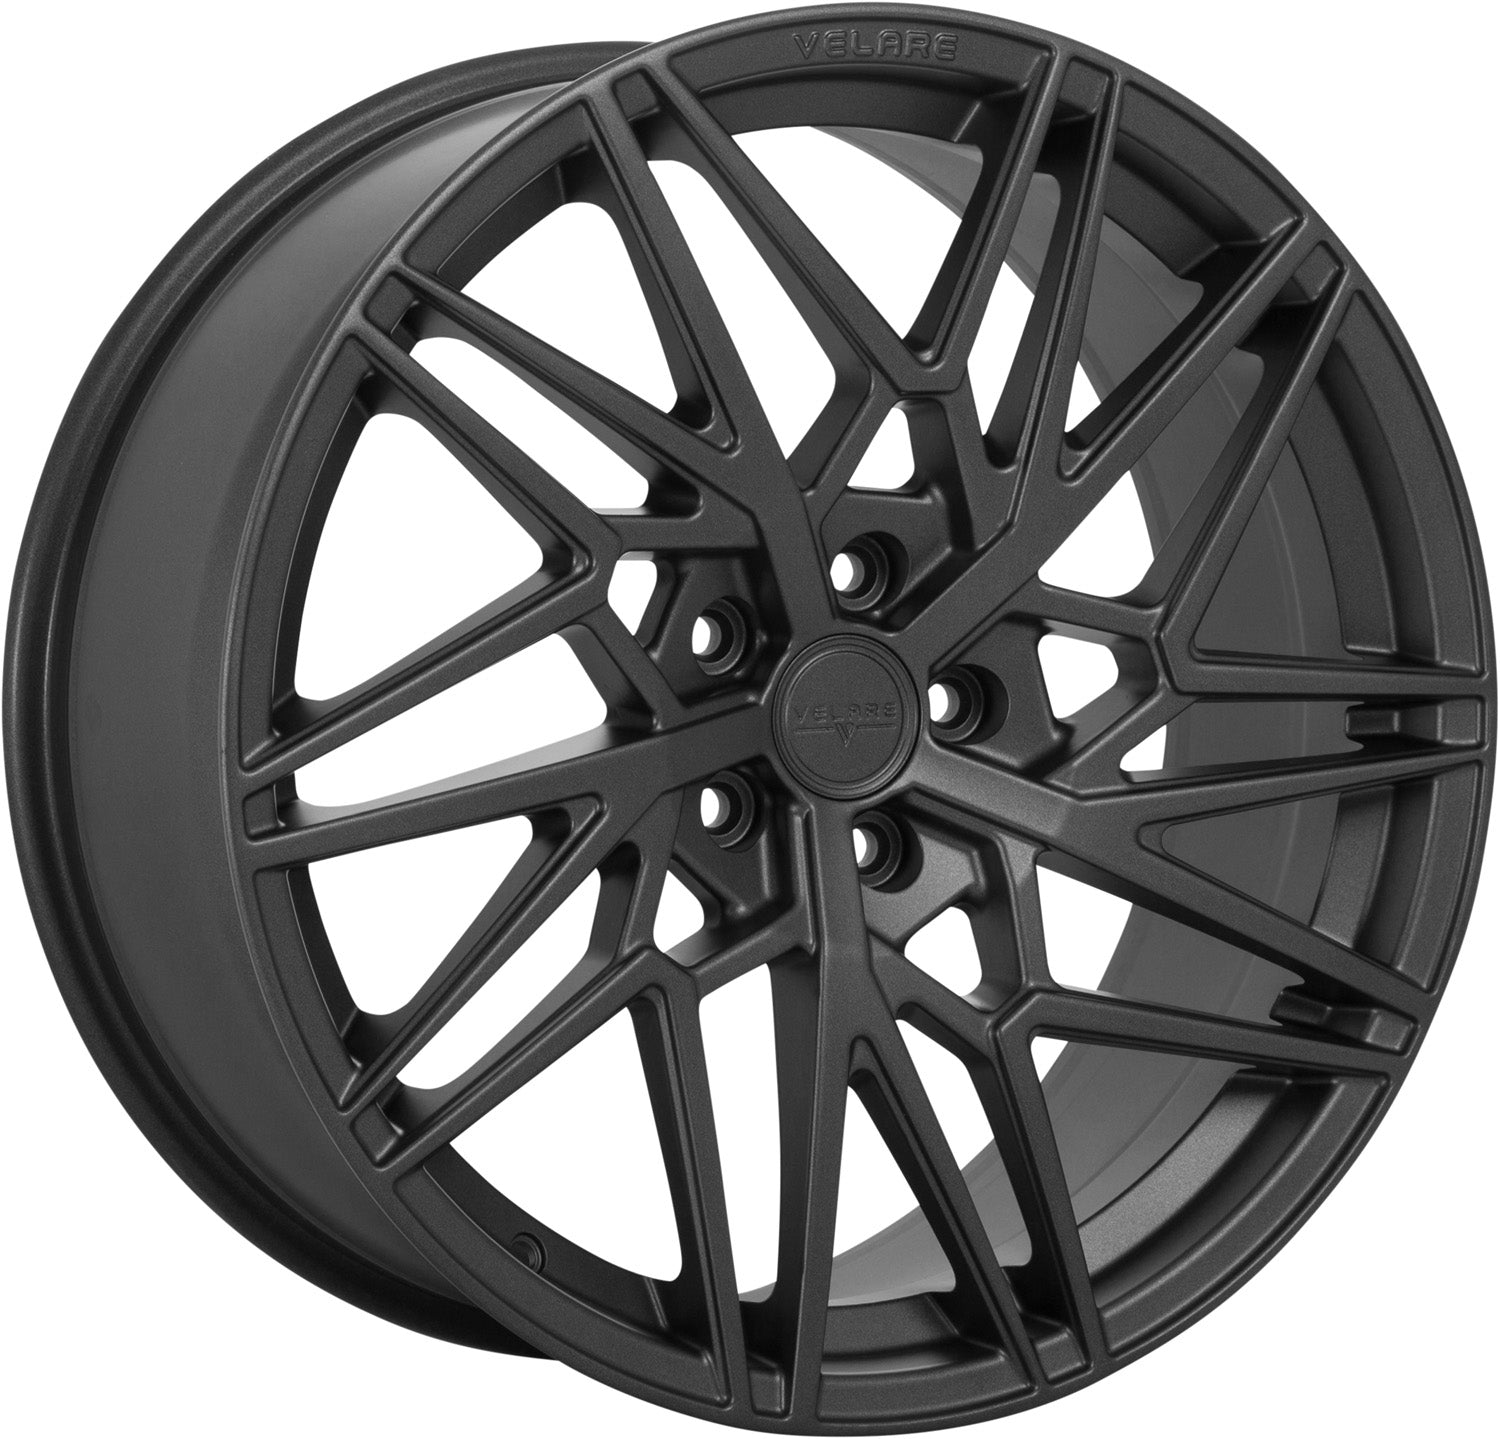 VLR06 Wheel and Tyre Package-Motor Vehicle Rims & Wheels-Velare- DC Leisure